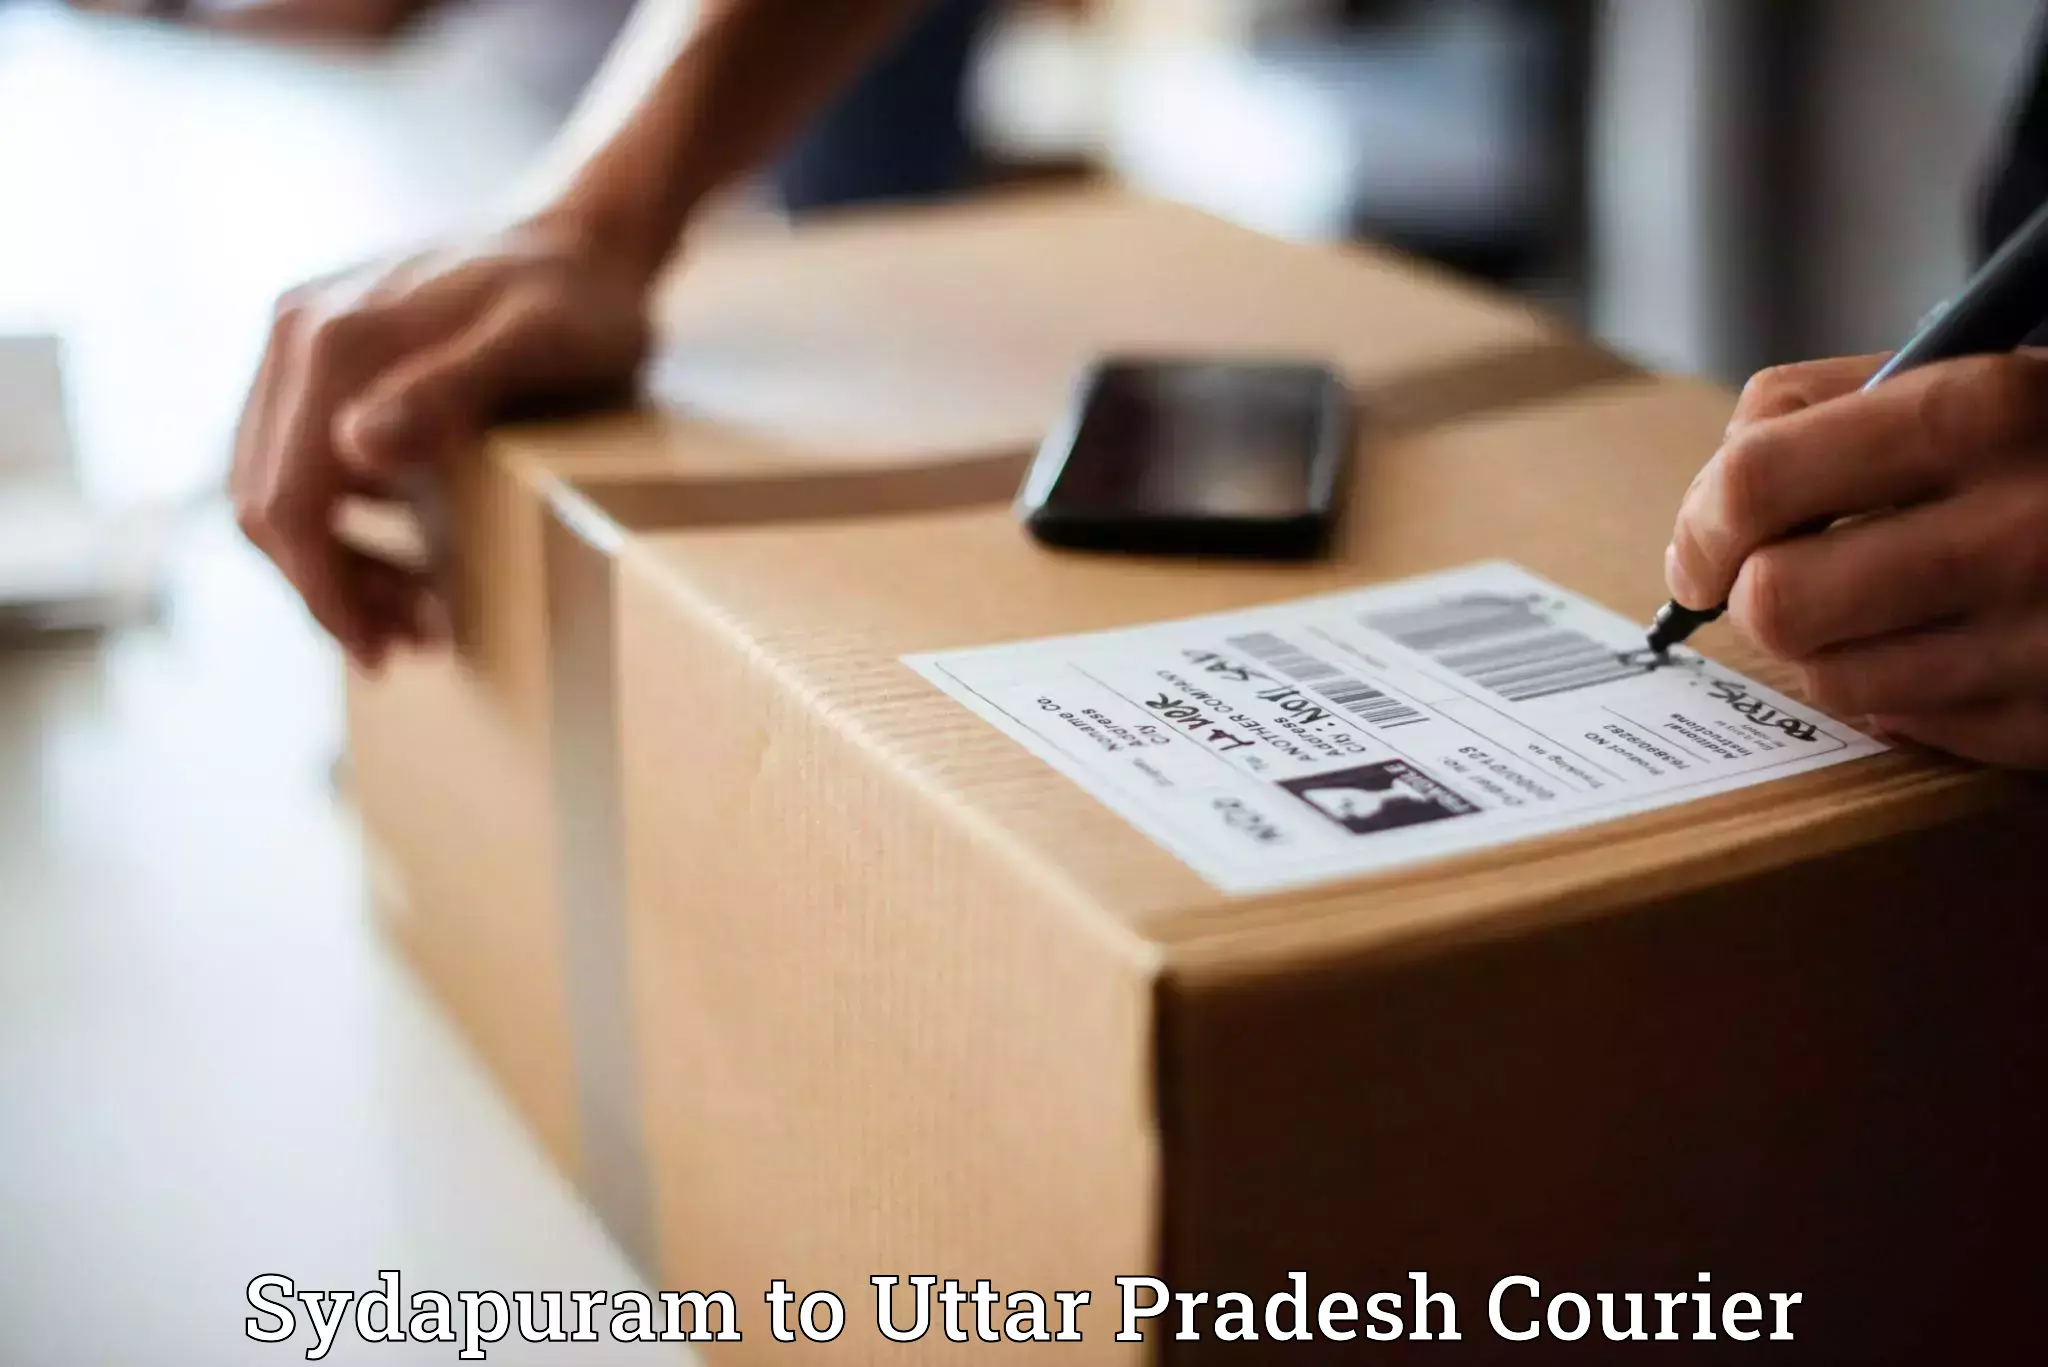 Sustainable delivery practices Sydapuram to Uttar Pradesh